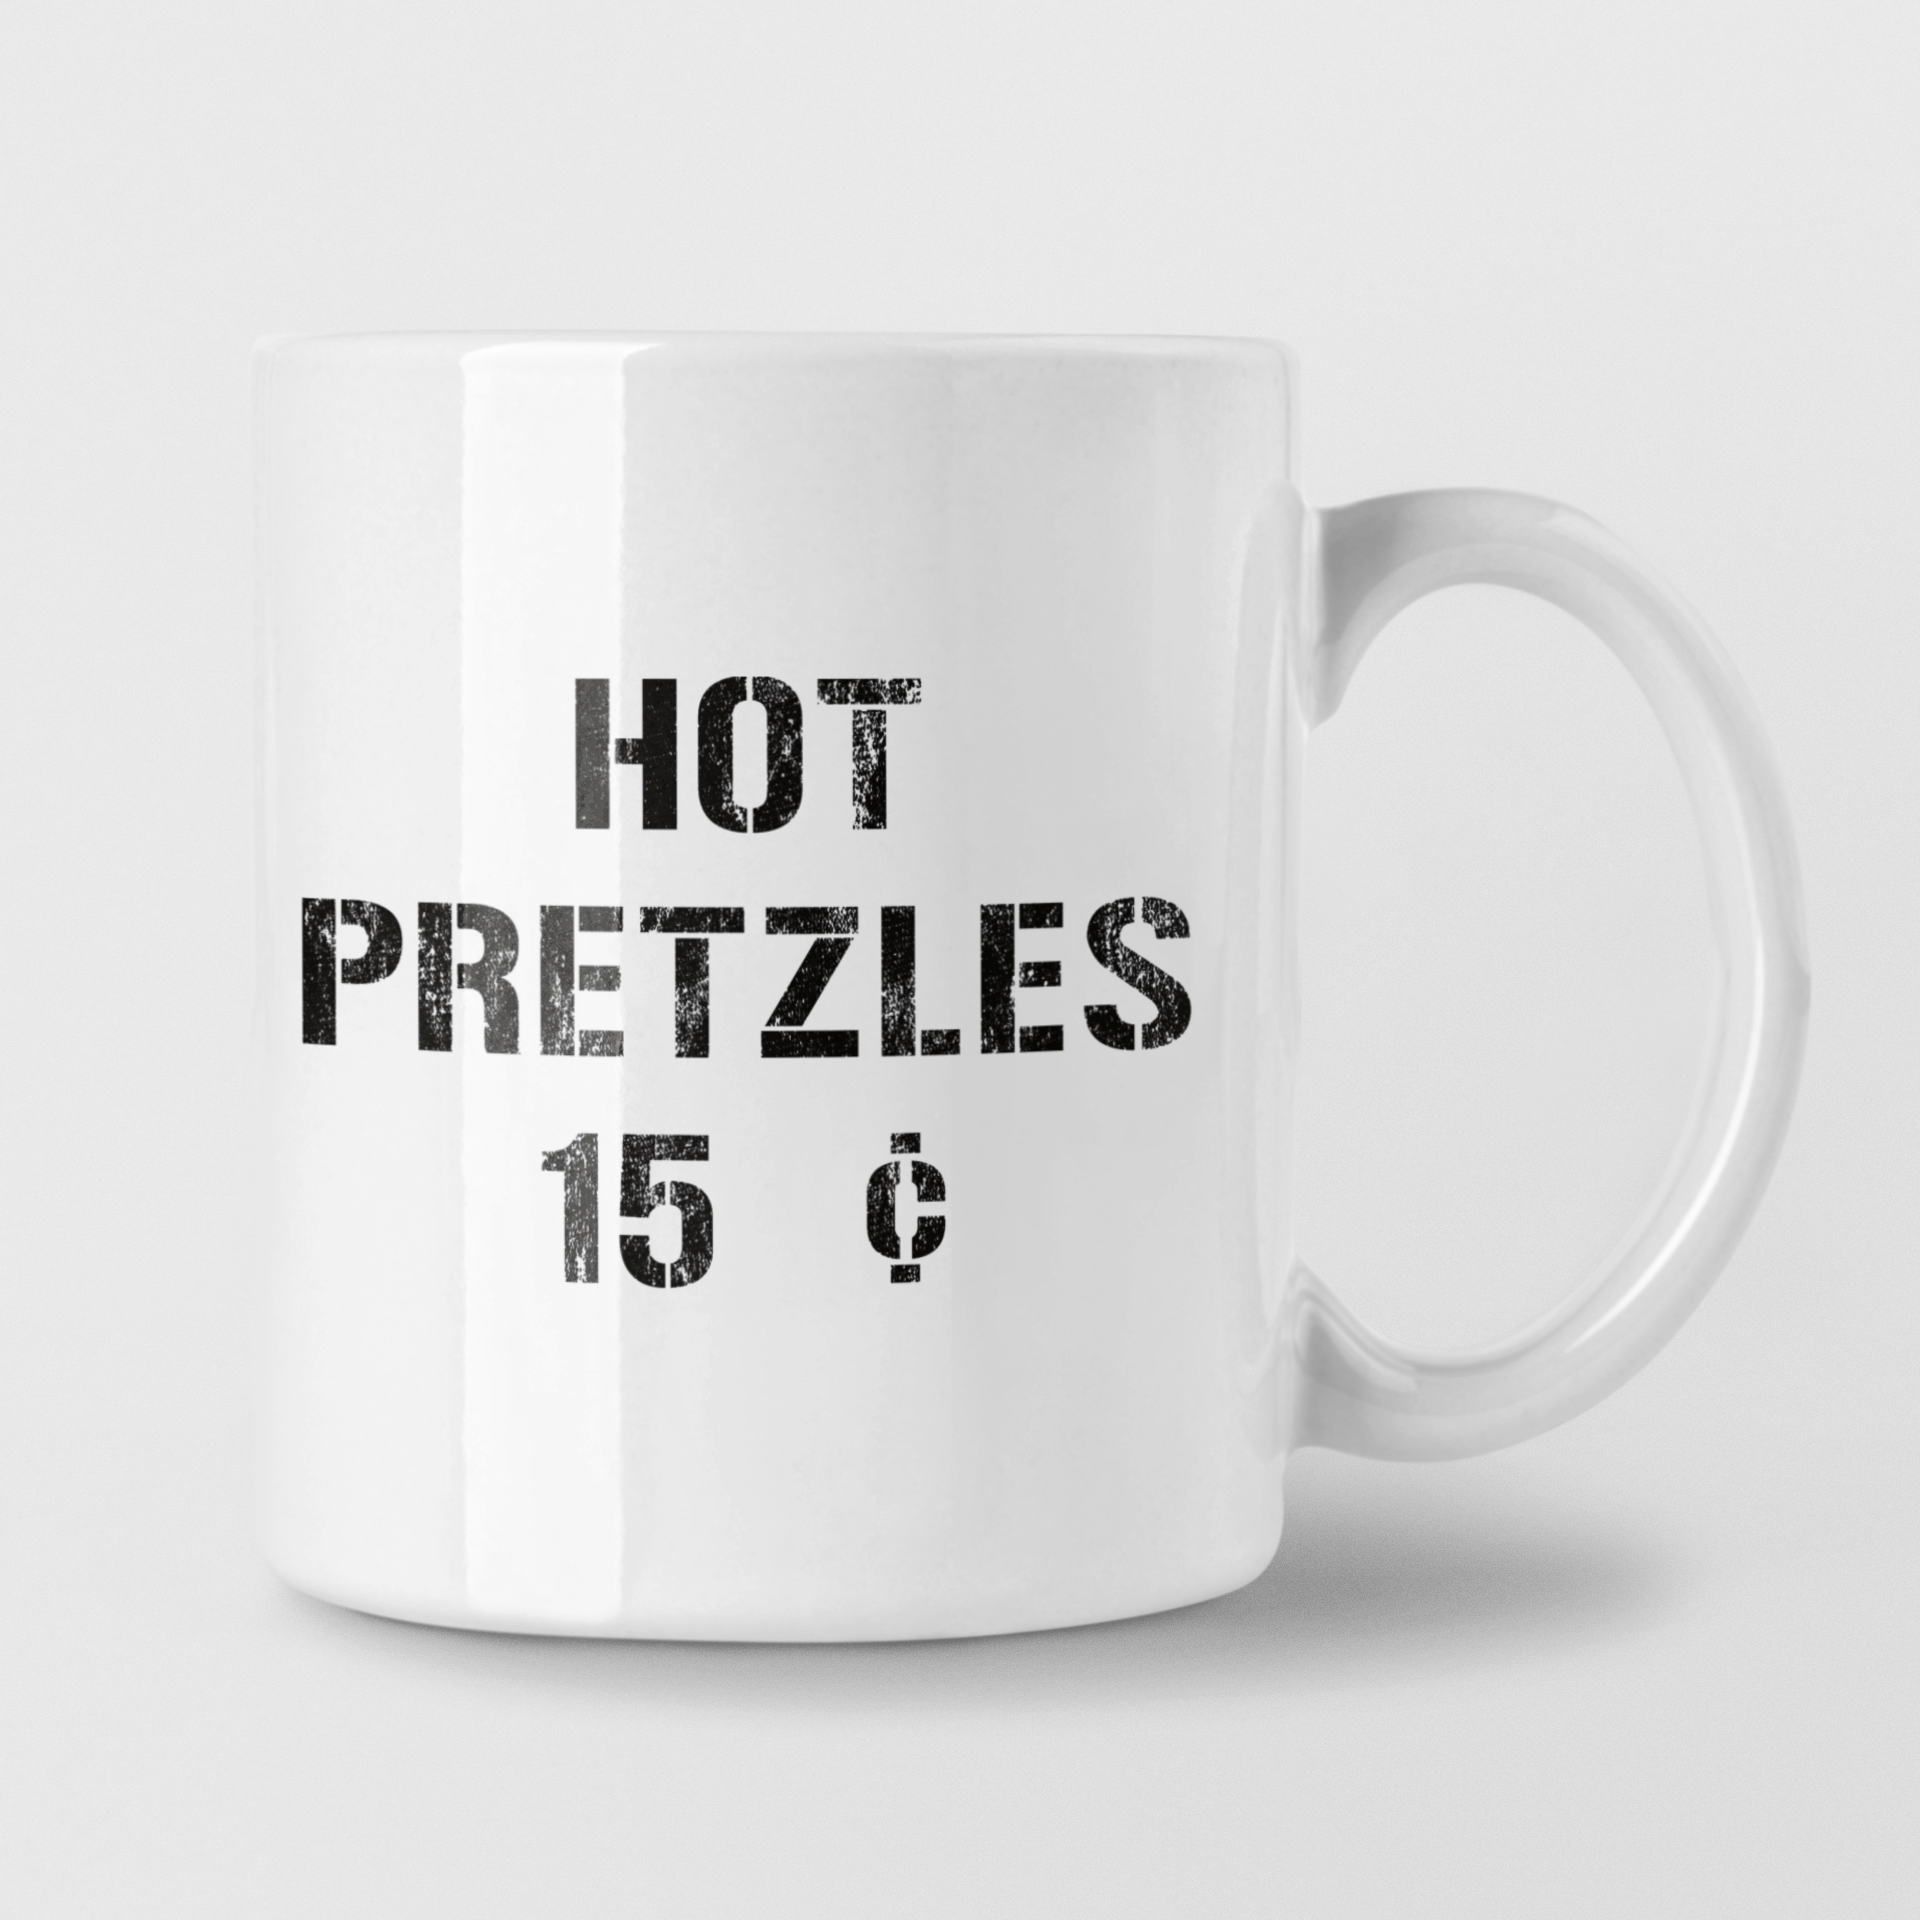 Inspired by Steely Dan - 15c Hot Pretzles 11oz Mug